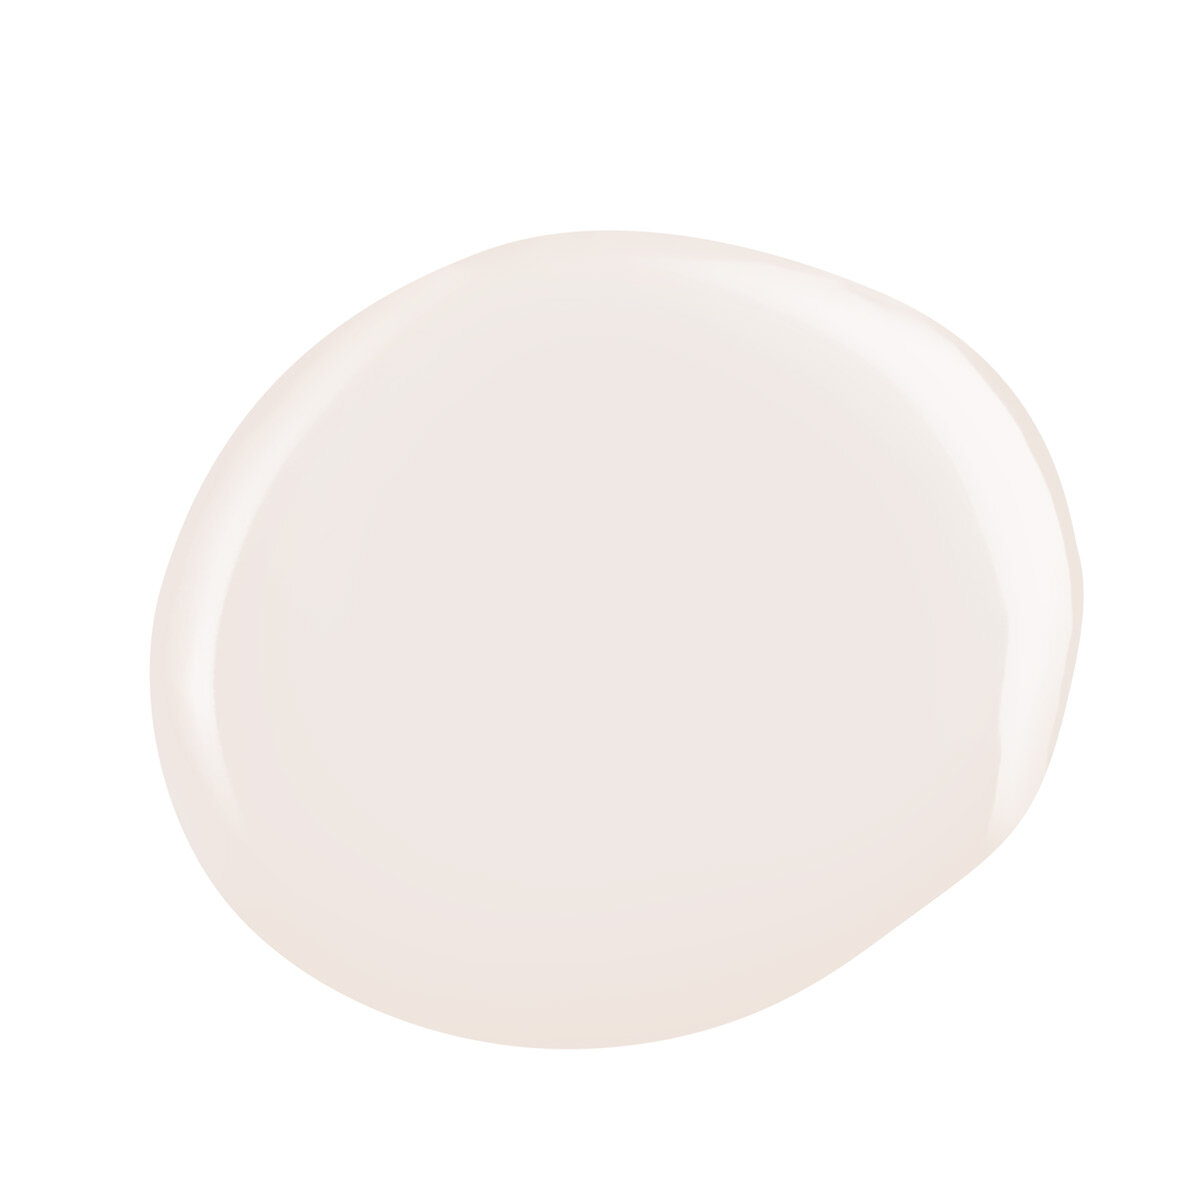 KINETICS Keramický bázový gel lak - SHIELD (HEMA FREE) - Cream Nude #918 - 15 ml